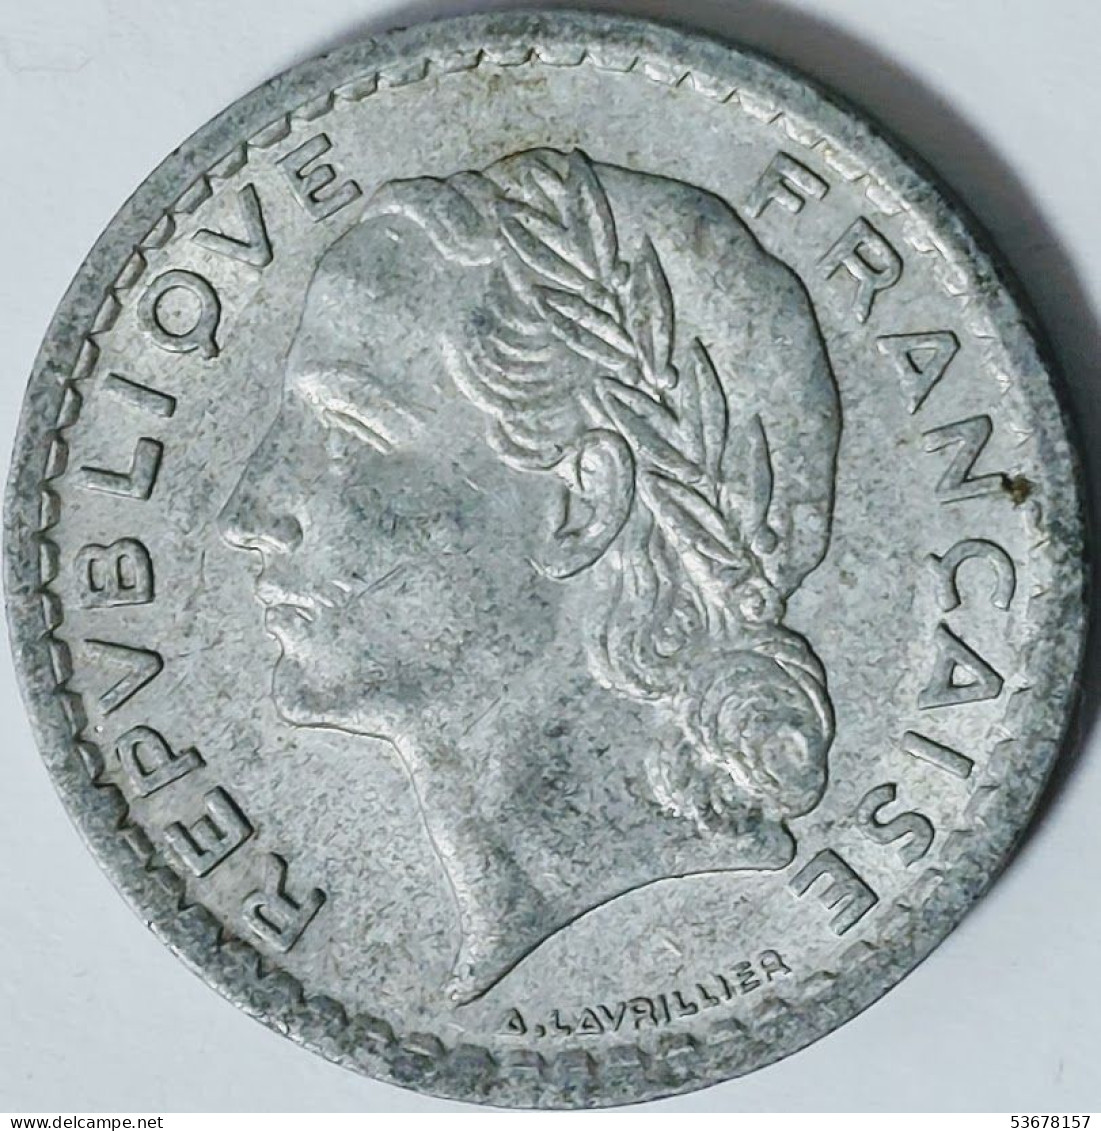 France - 5 Francs 1947, KM# 888b.1 (#2478) - 5 Francs